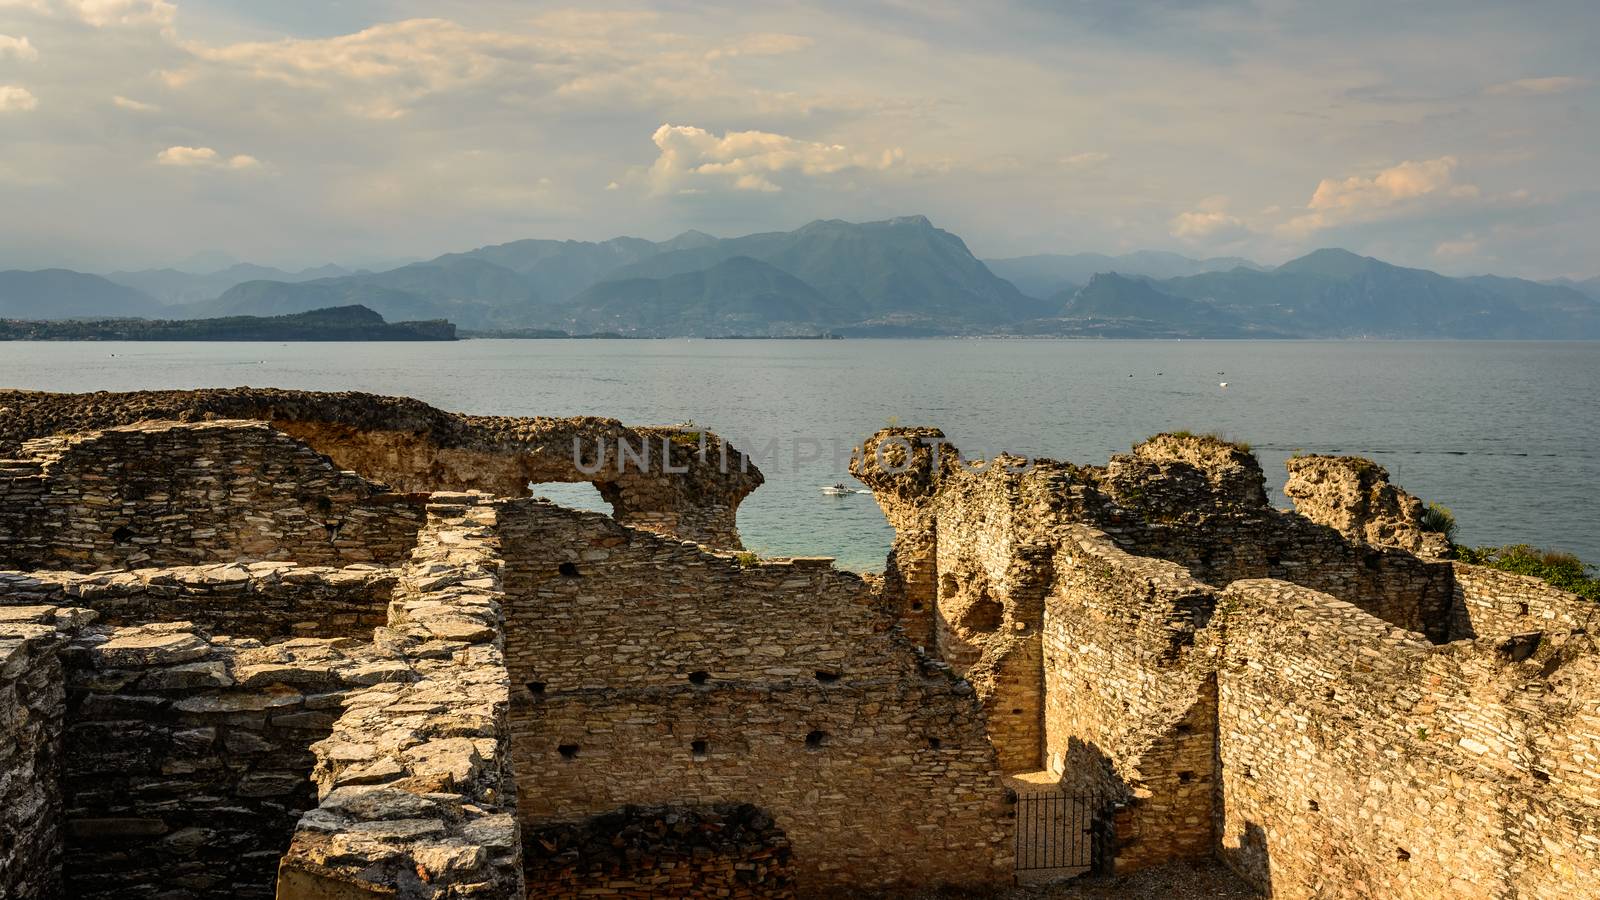 Ruin caves of Catullus by Robertobinetti70